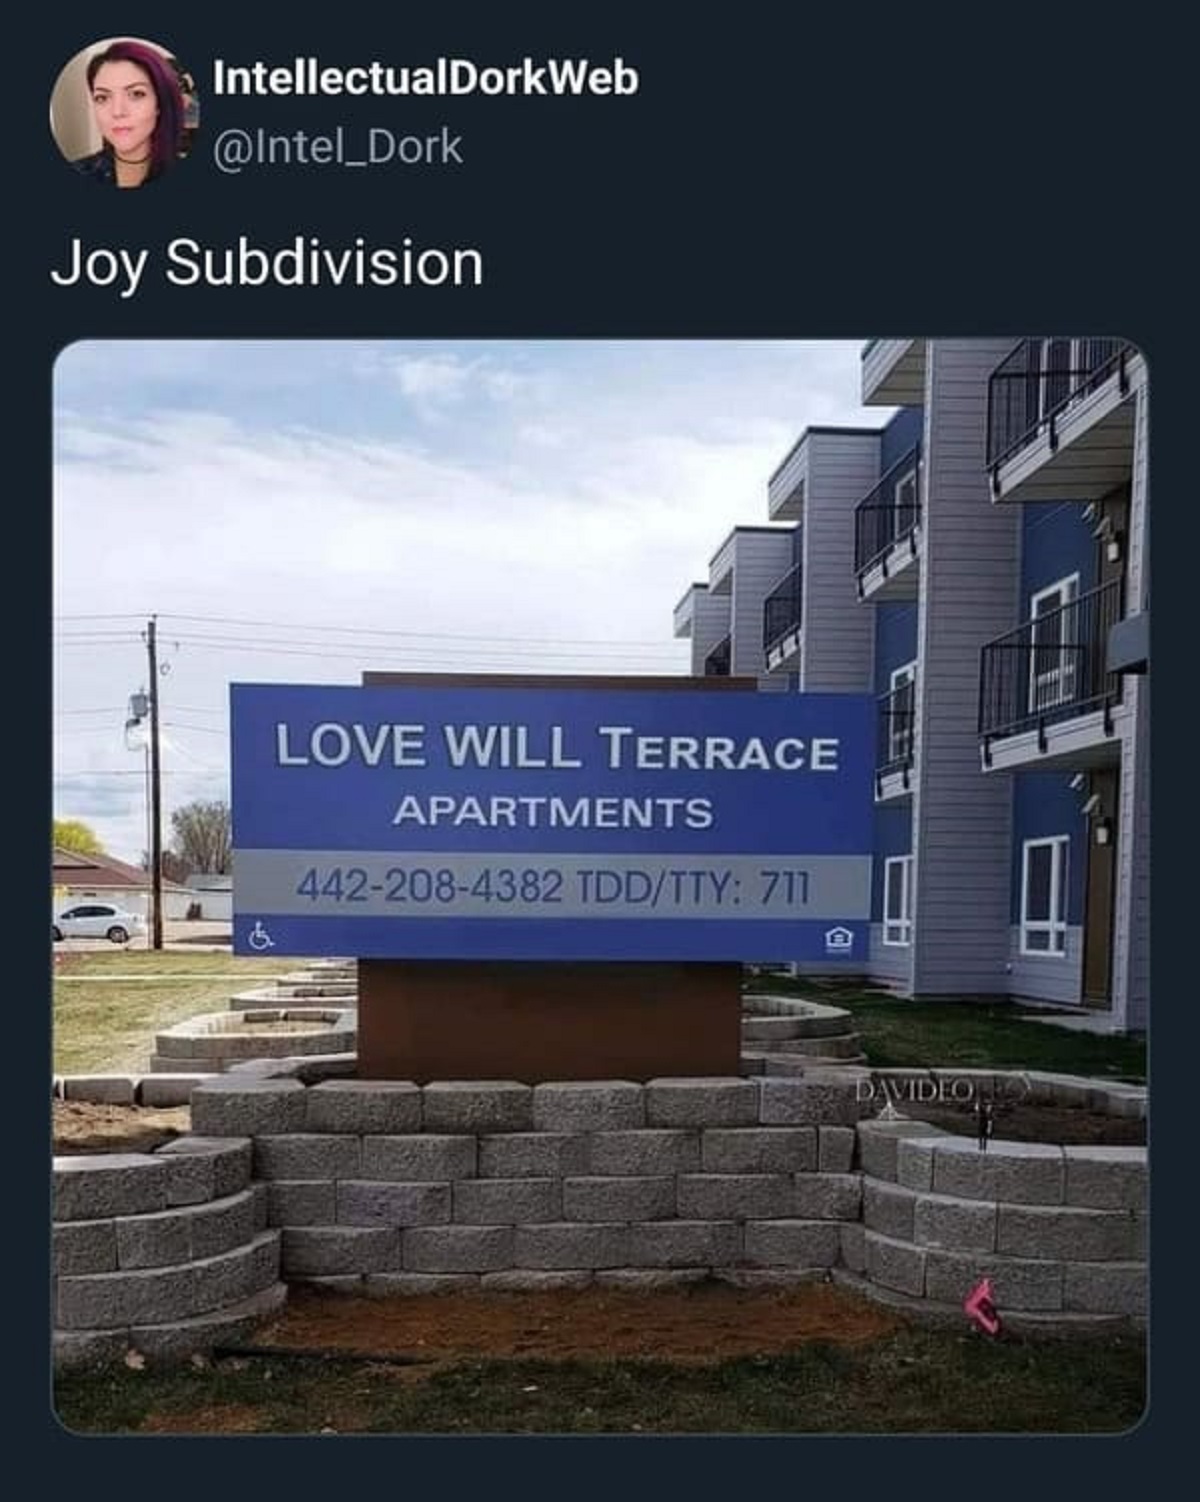 memes with music lyrics - IntellectualDorkWeb Joy Subdivision Love Will Terrace Apartments 4422084382 TddTty 711 Davideo